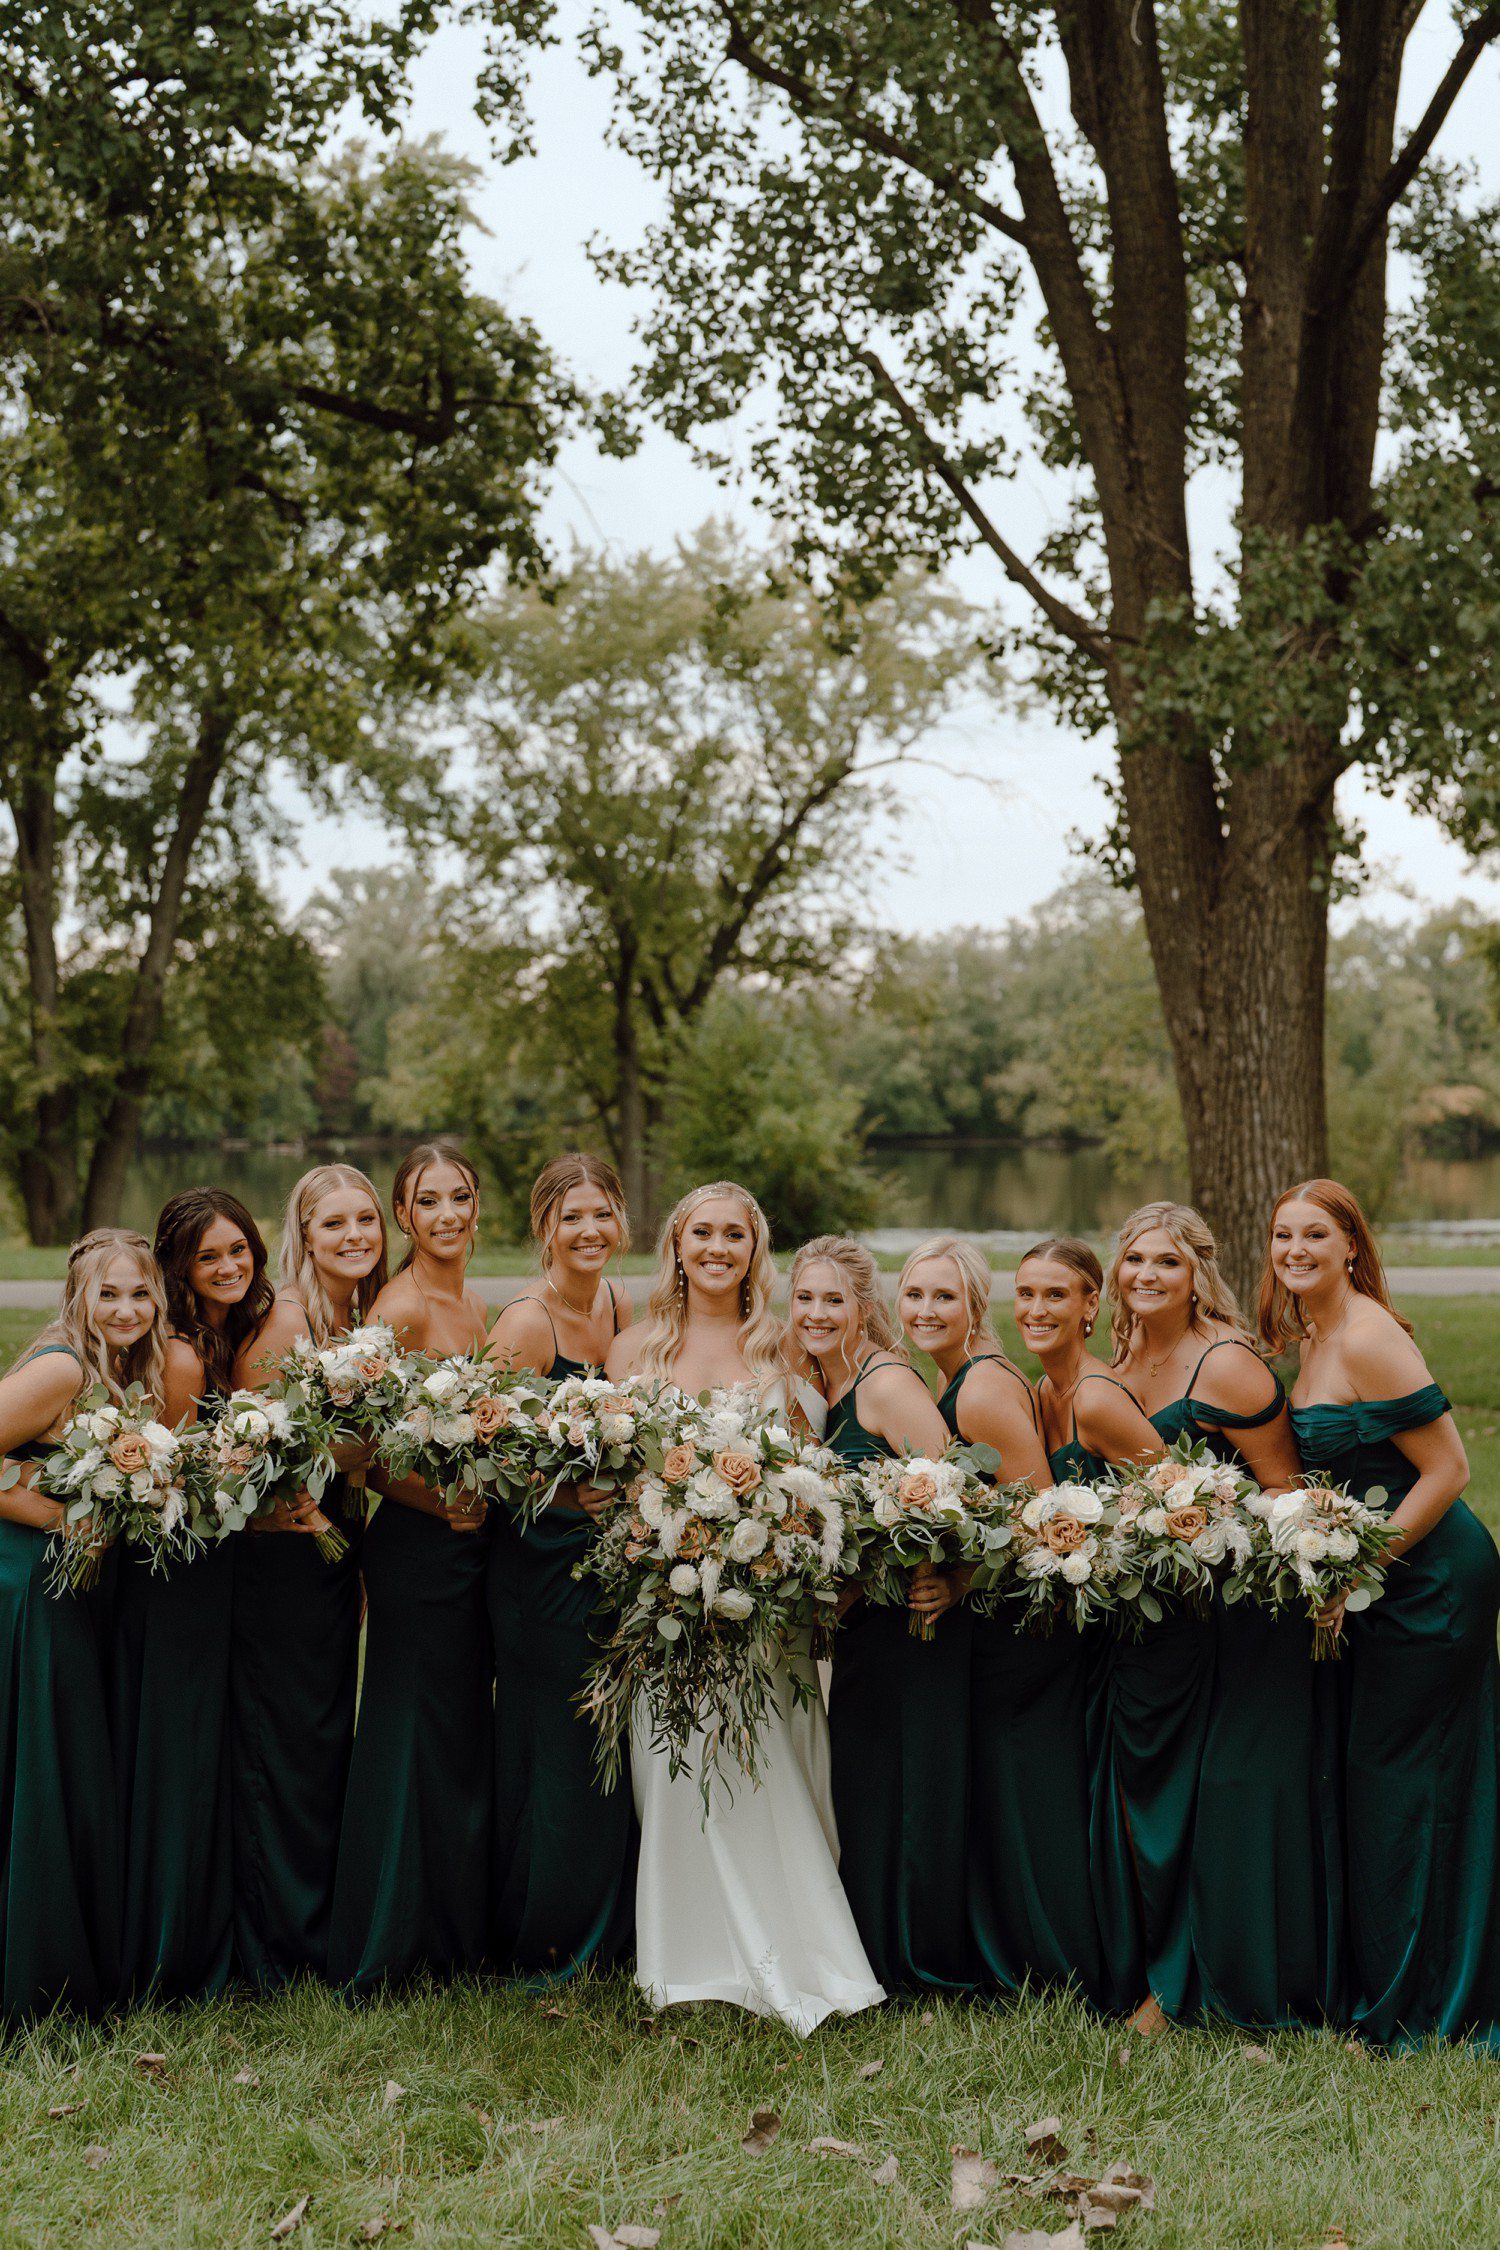 Bride and bridesmaid photos with dark green bridesmaid dresses.